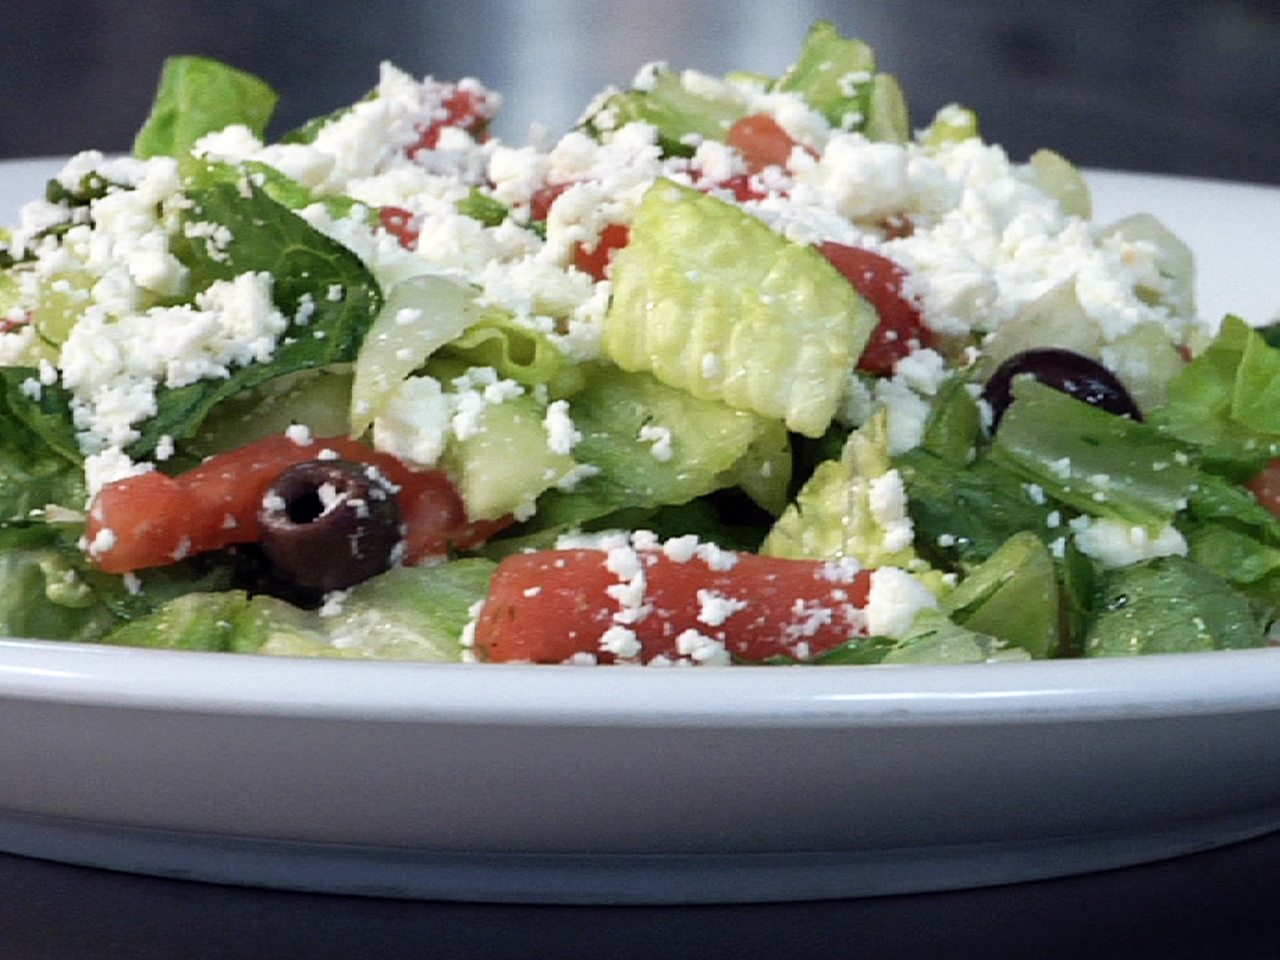 How to make restaurant-quality salads at home - CBS News